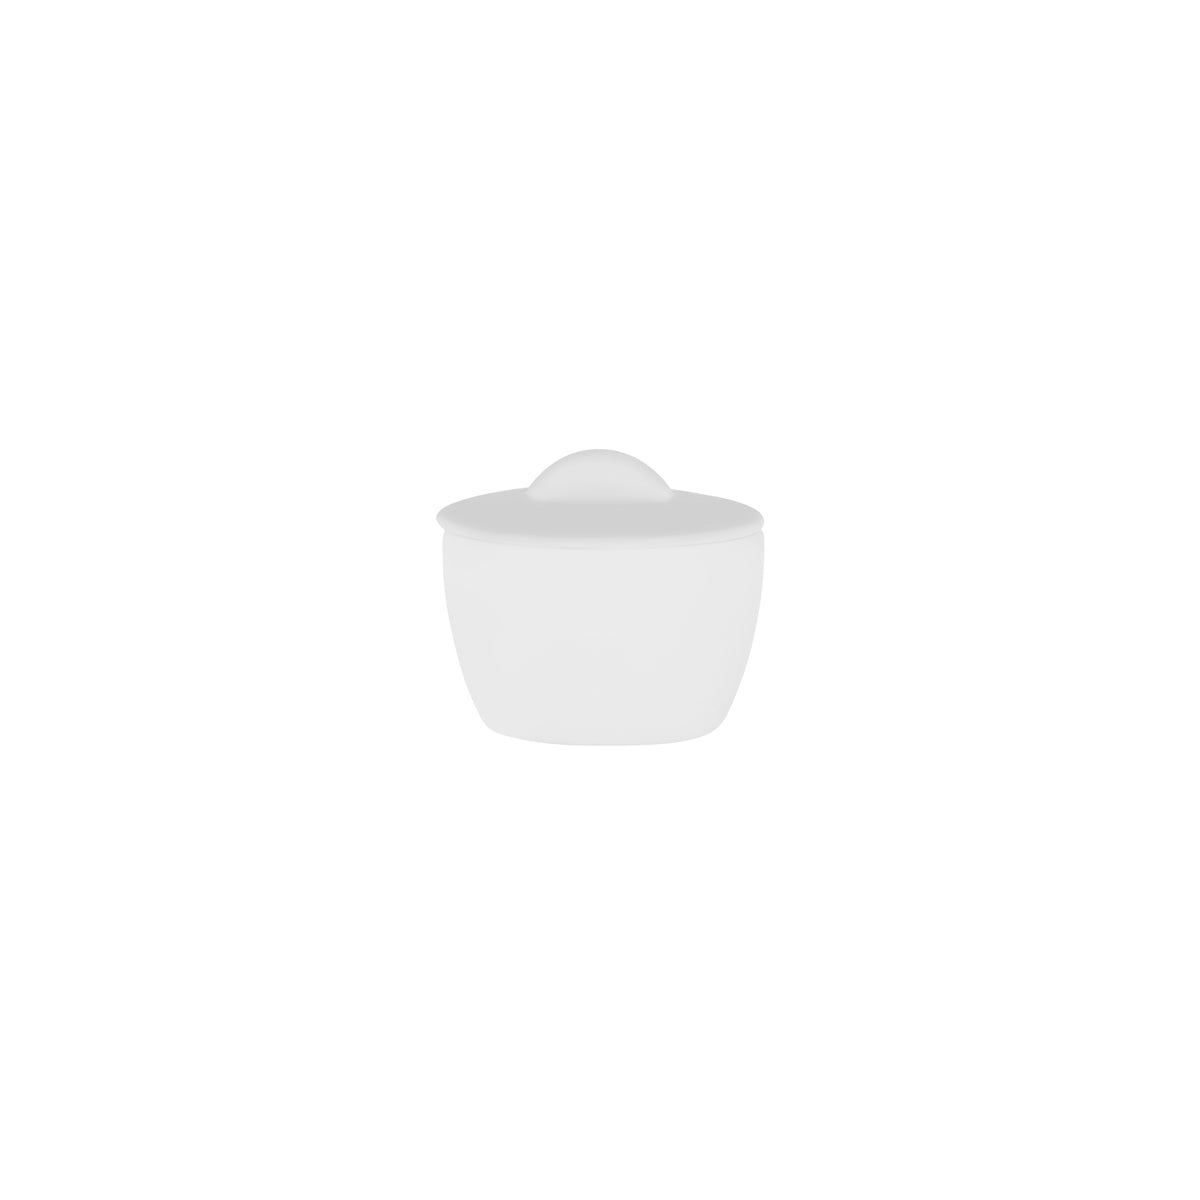 95065 Royal Bone China Ascot Sugar Bowl With Lid 0.22Lt (B1023+L) Tomkin Australia Hospitality Supplies